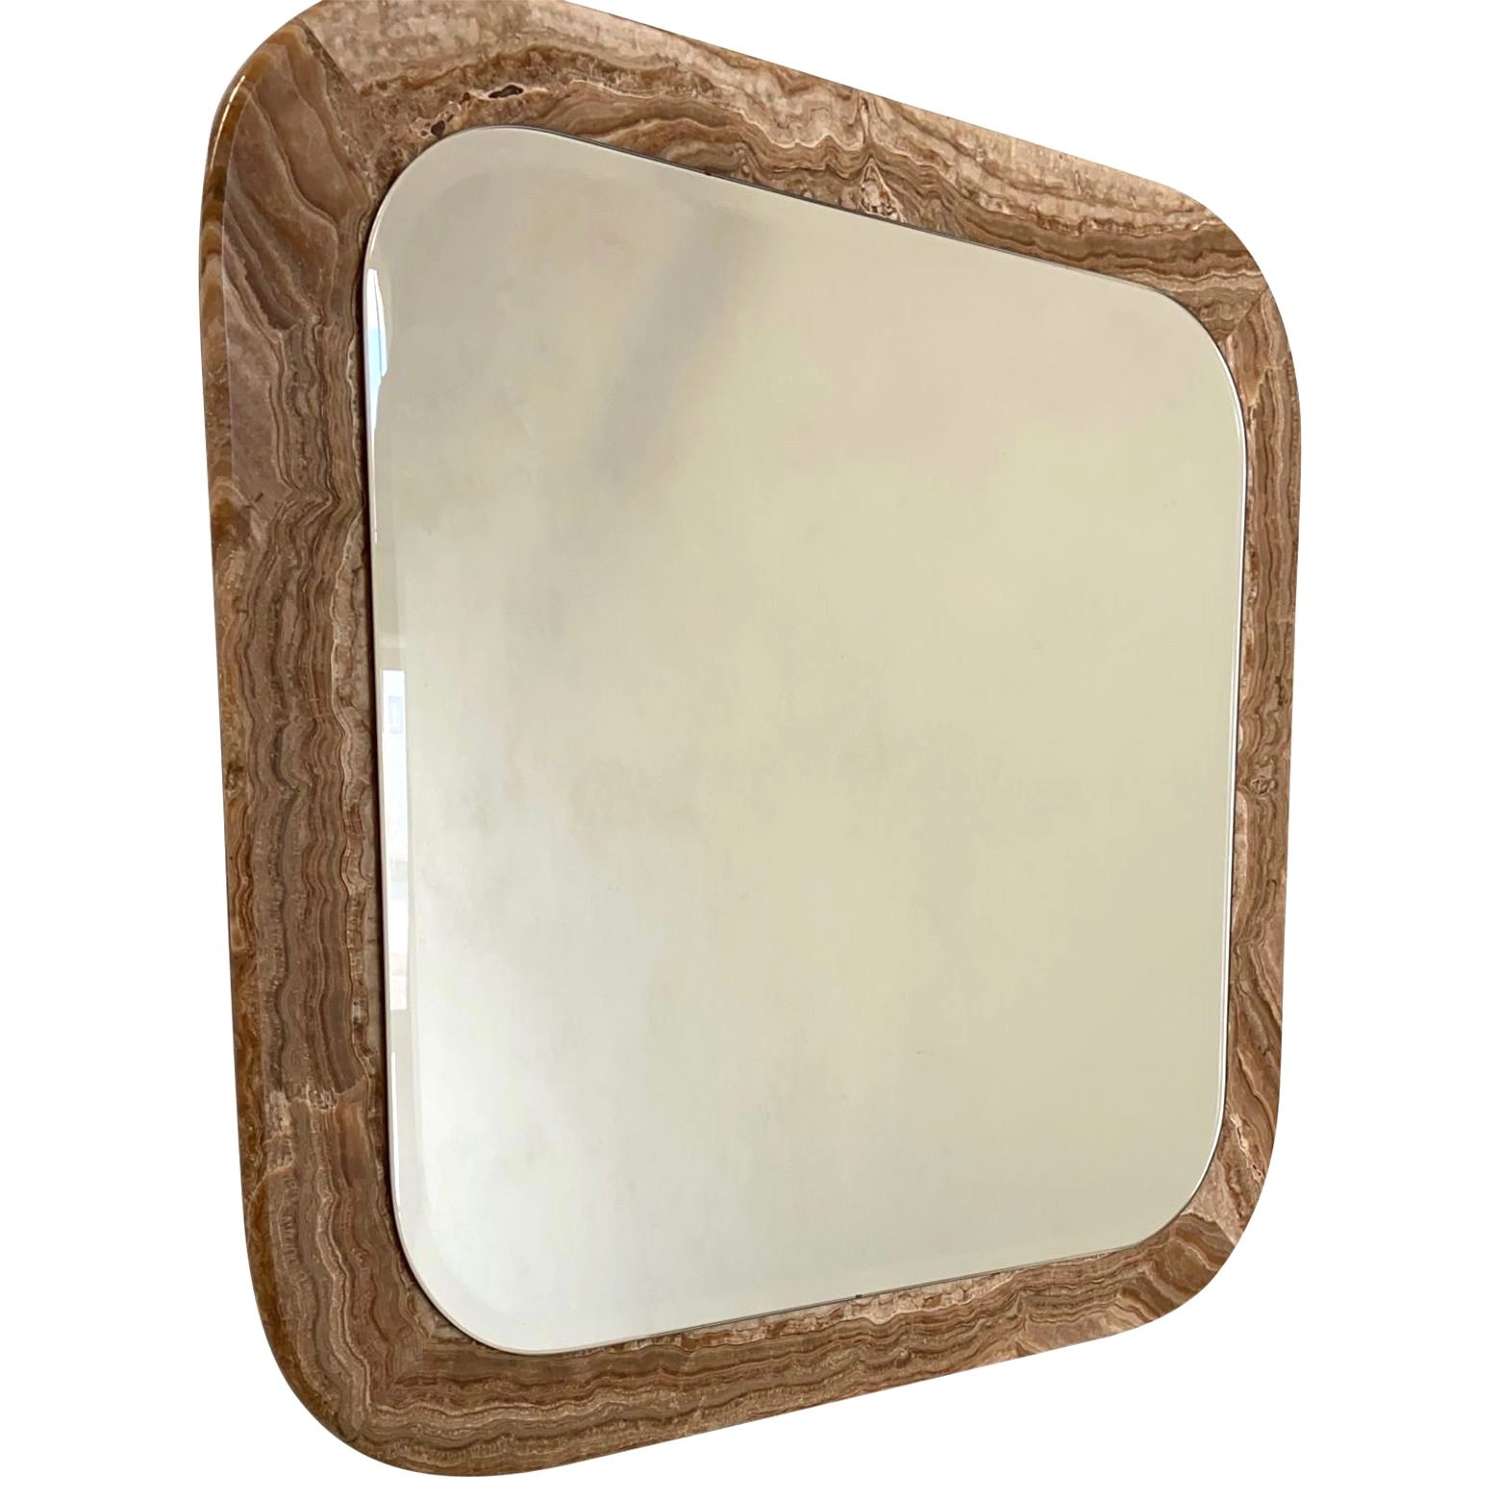 1970's marble mirror